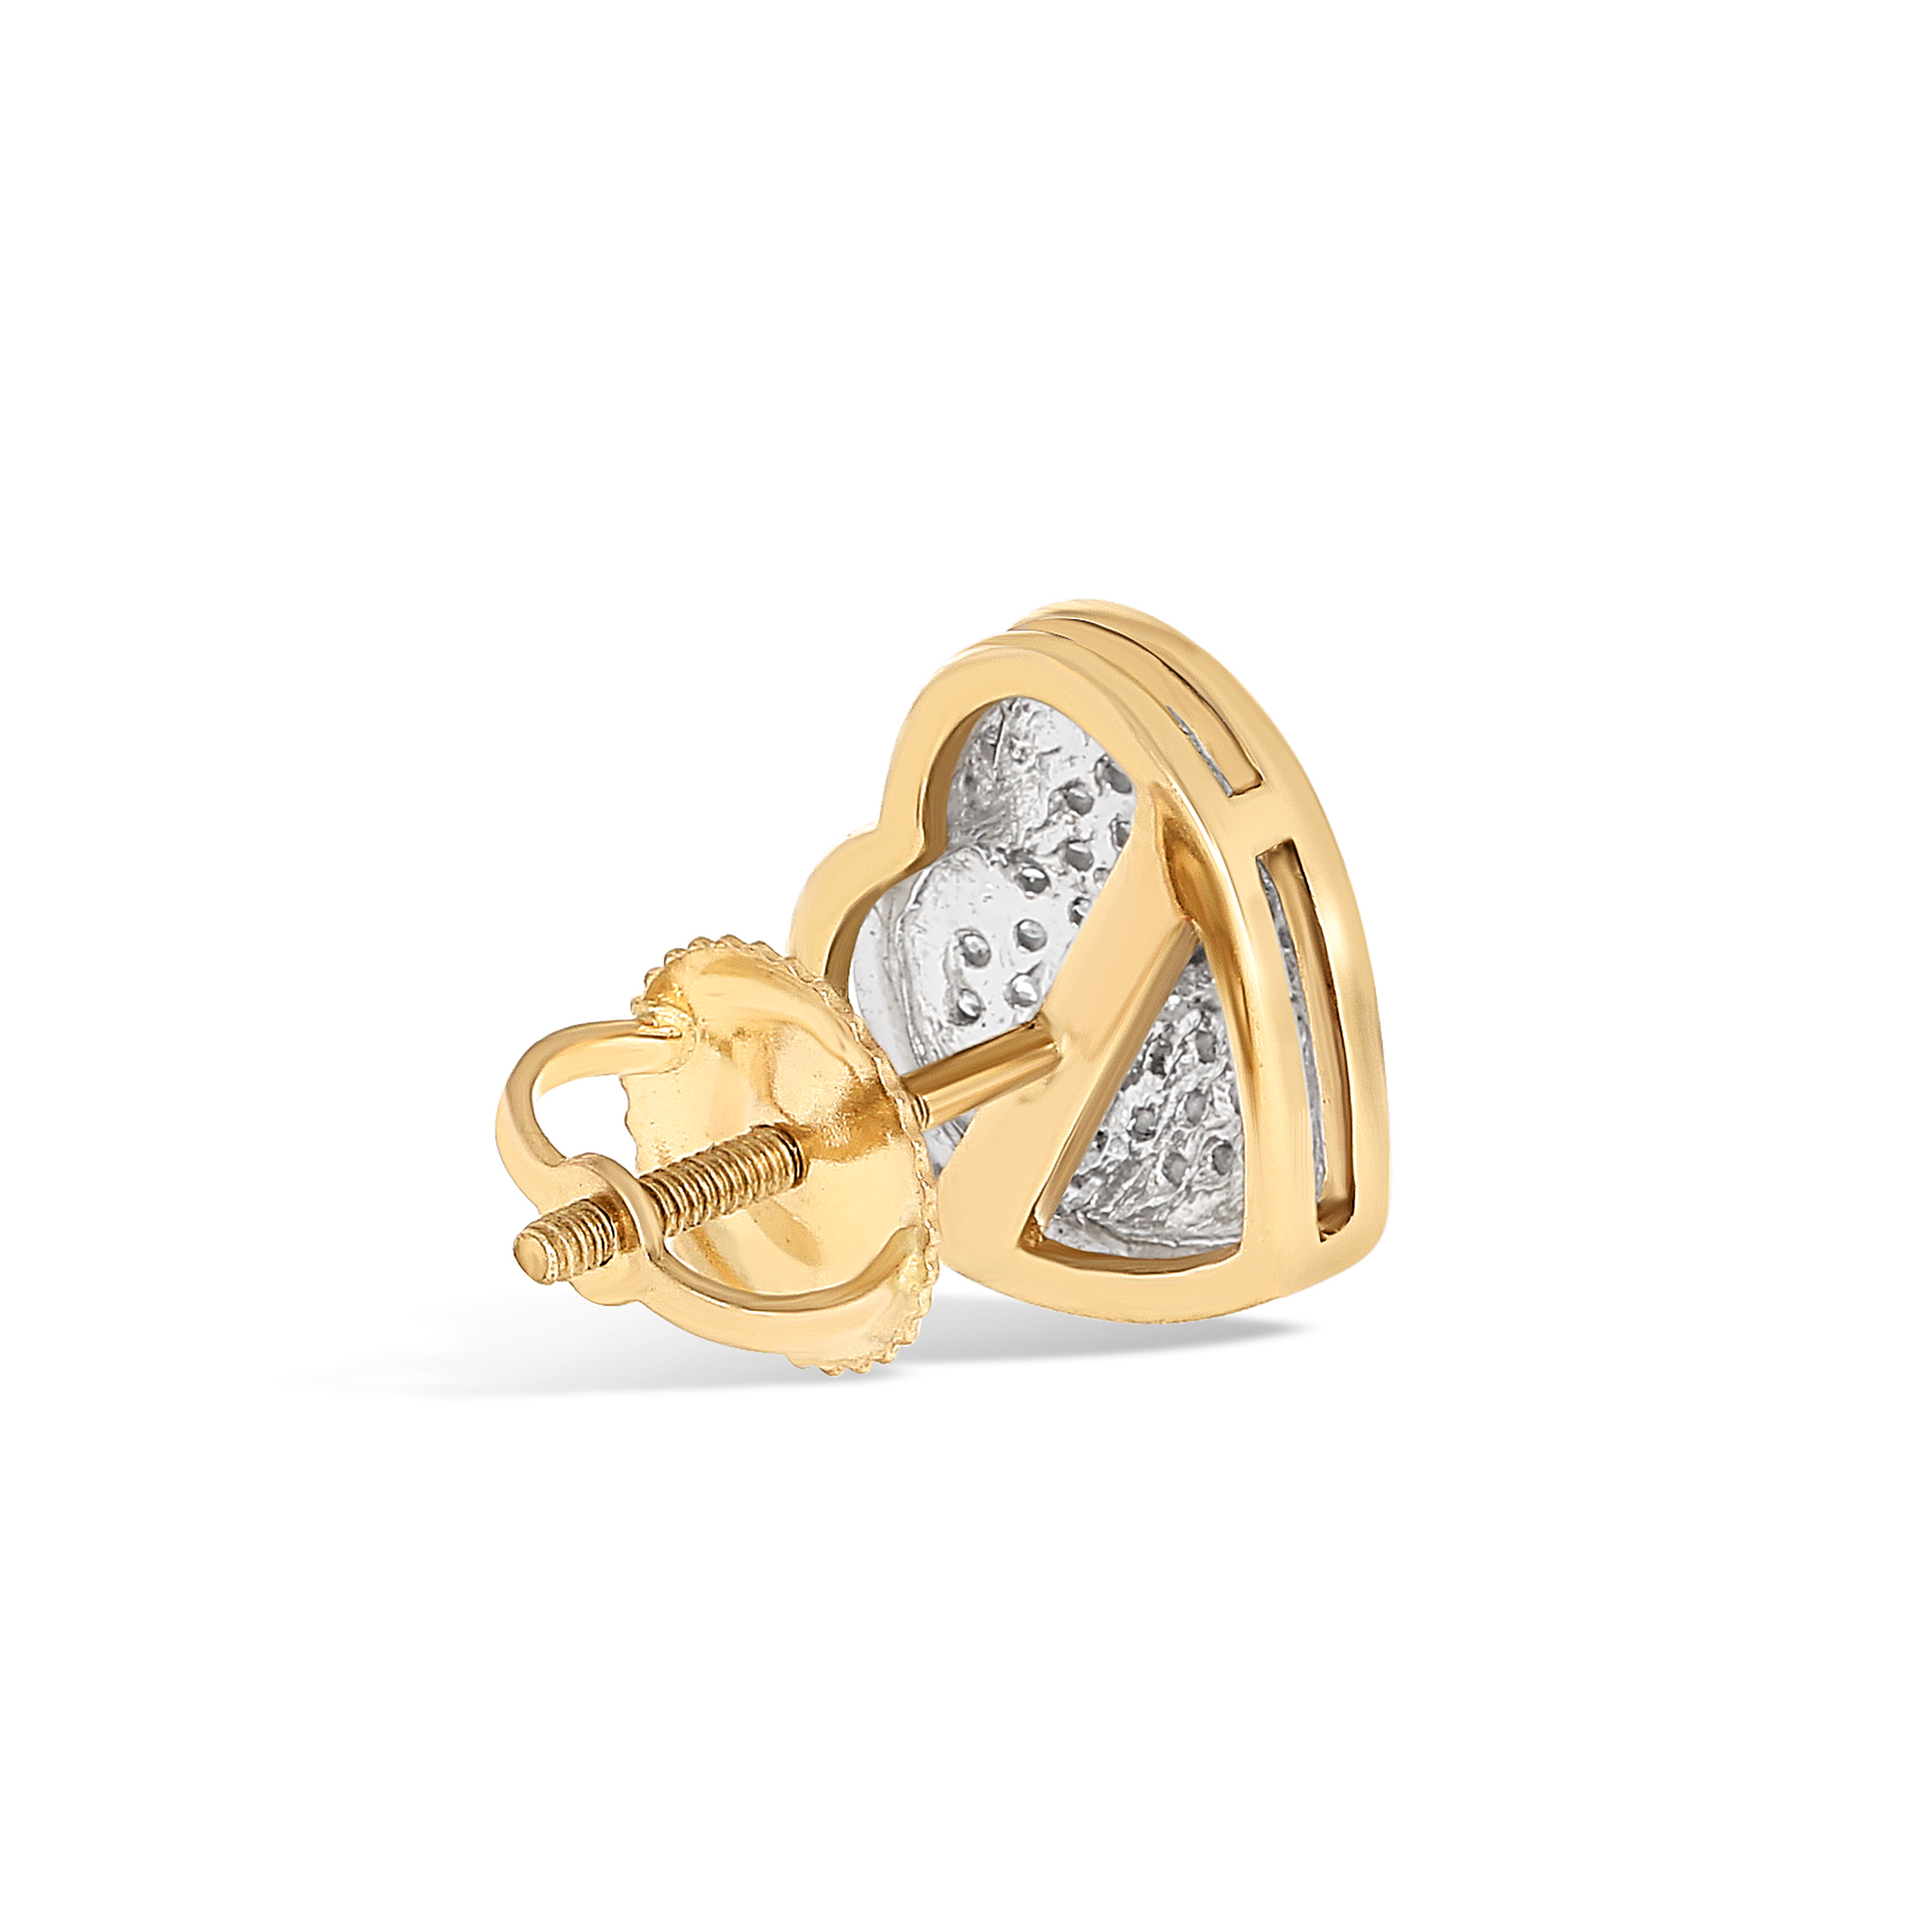 Heart Shaped Diamond Earrings 0.37 ct. 10k Yellow Gold